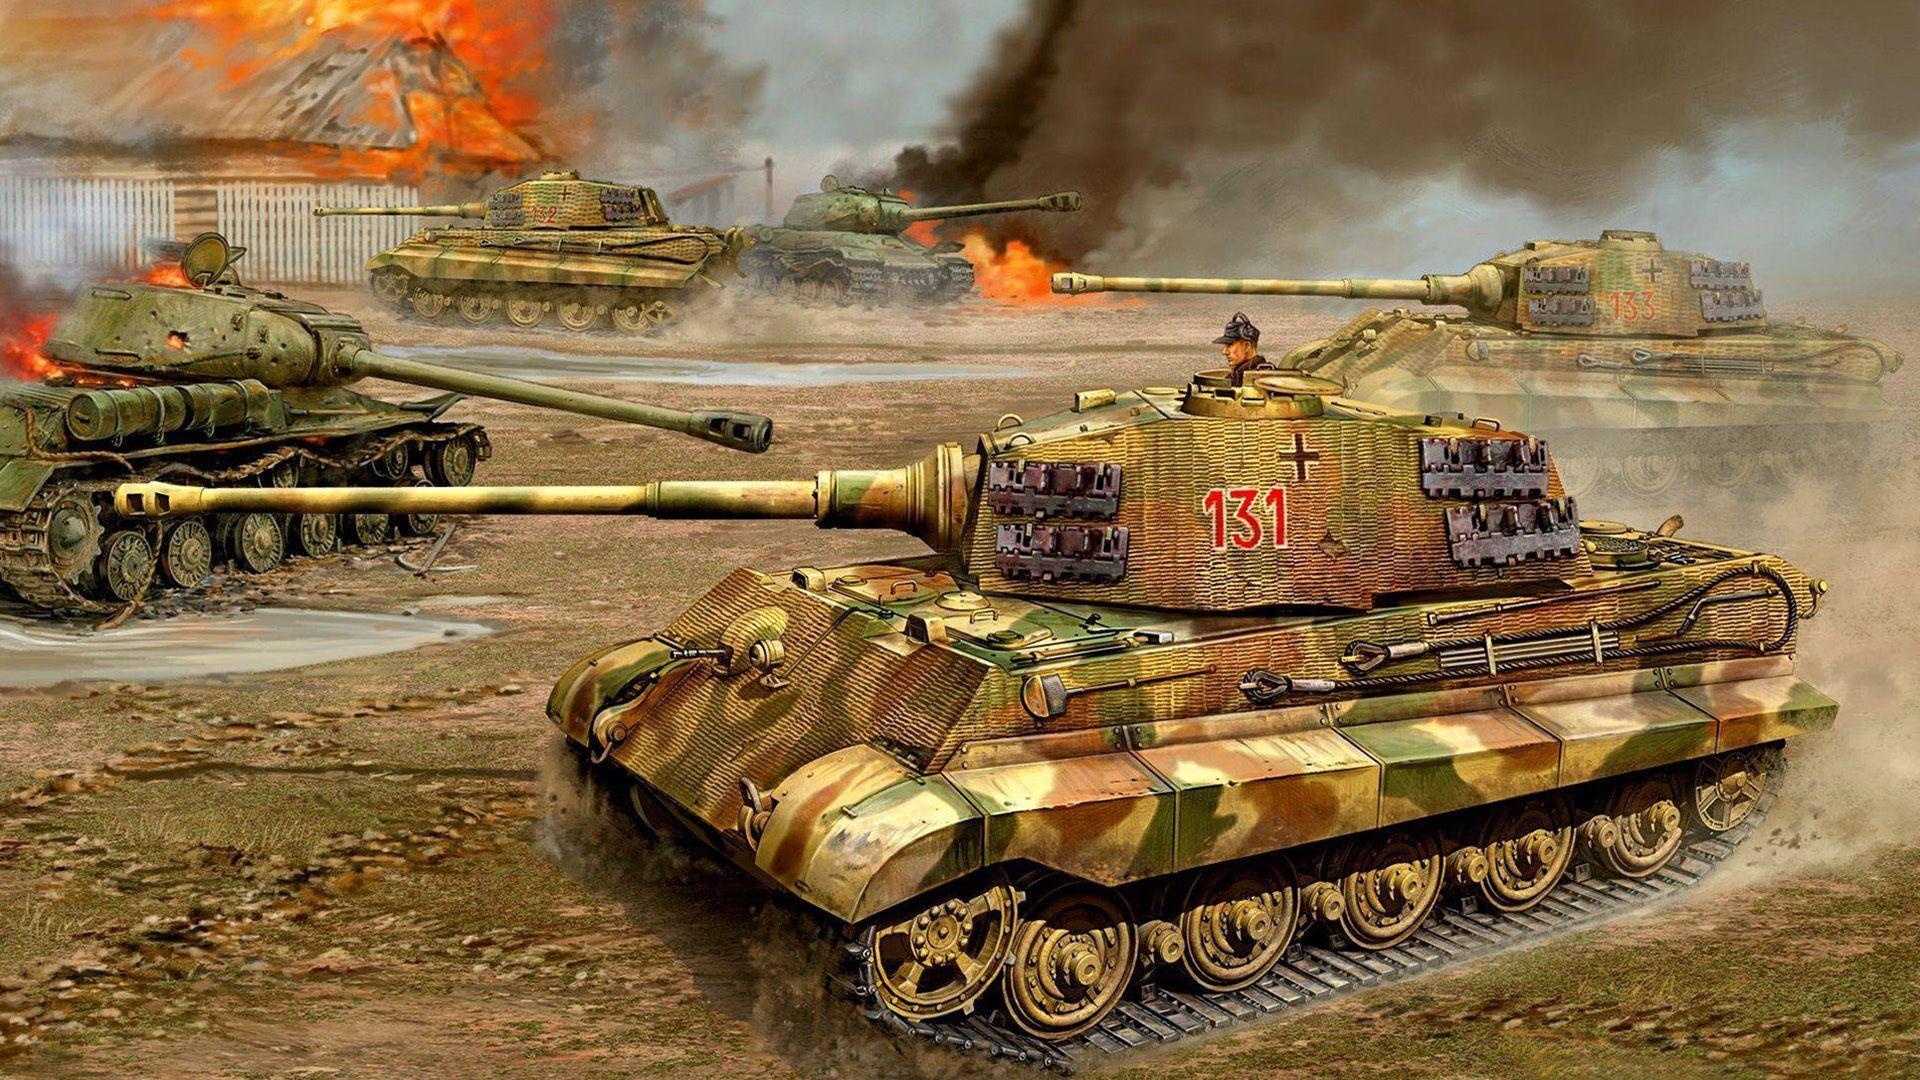 Tiger Tank Wallpaper High Definition 12554